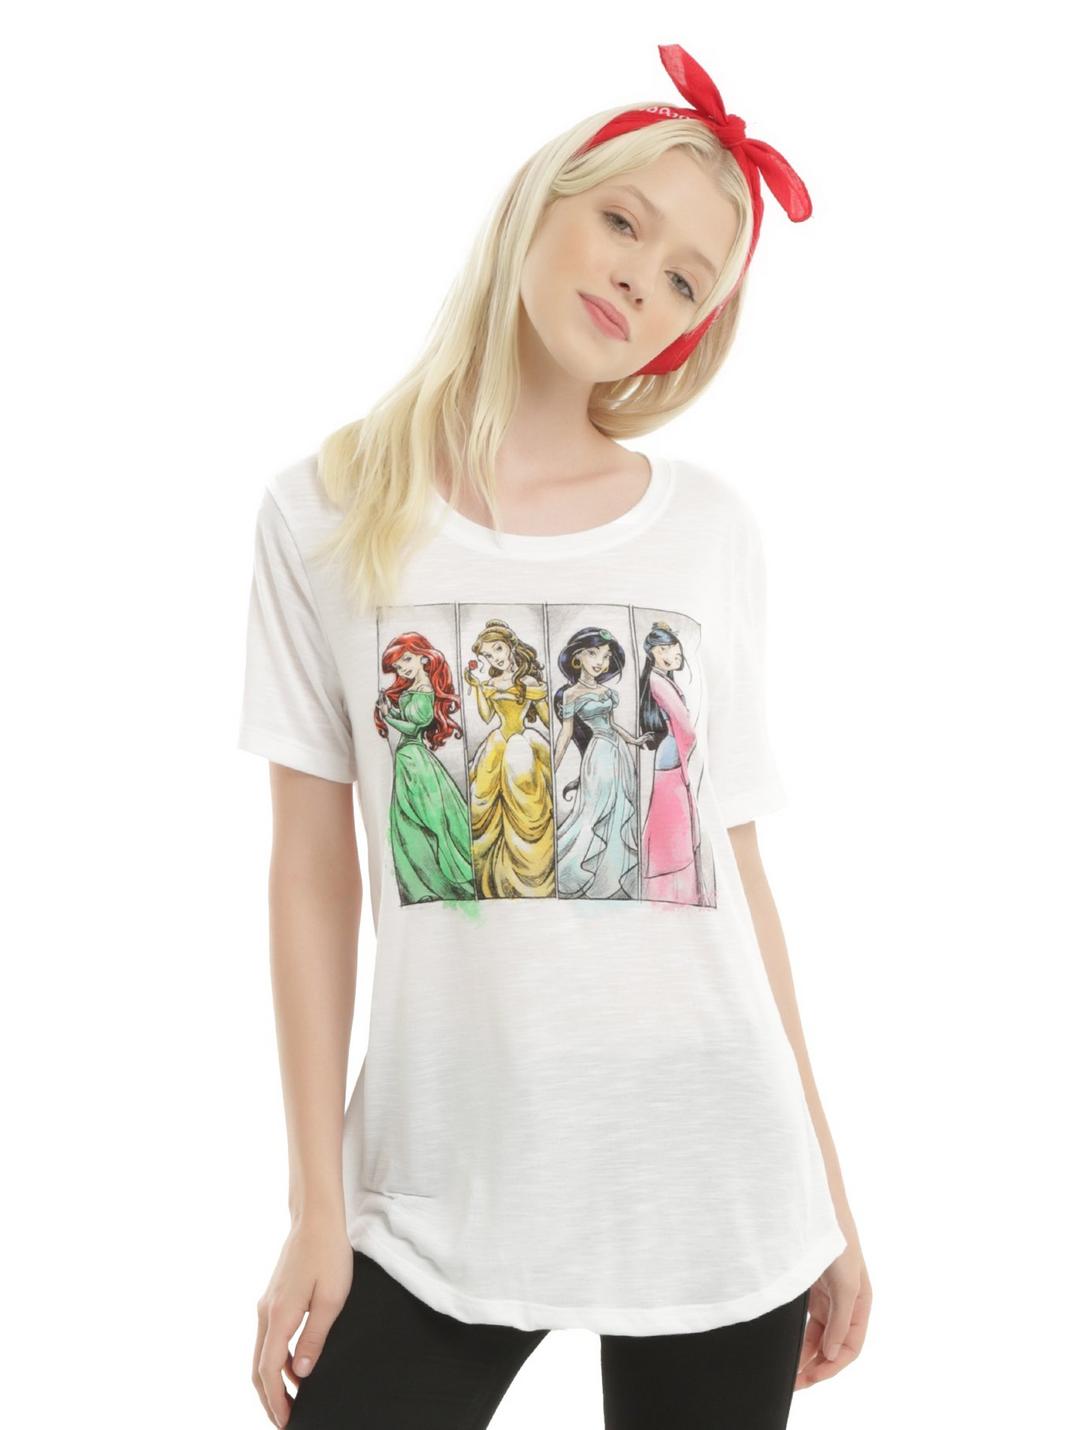 Disney Renaissance Princesses Panel Girls T-Shirt, WHITE, hi-res